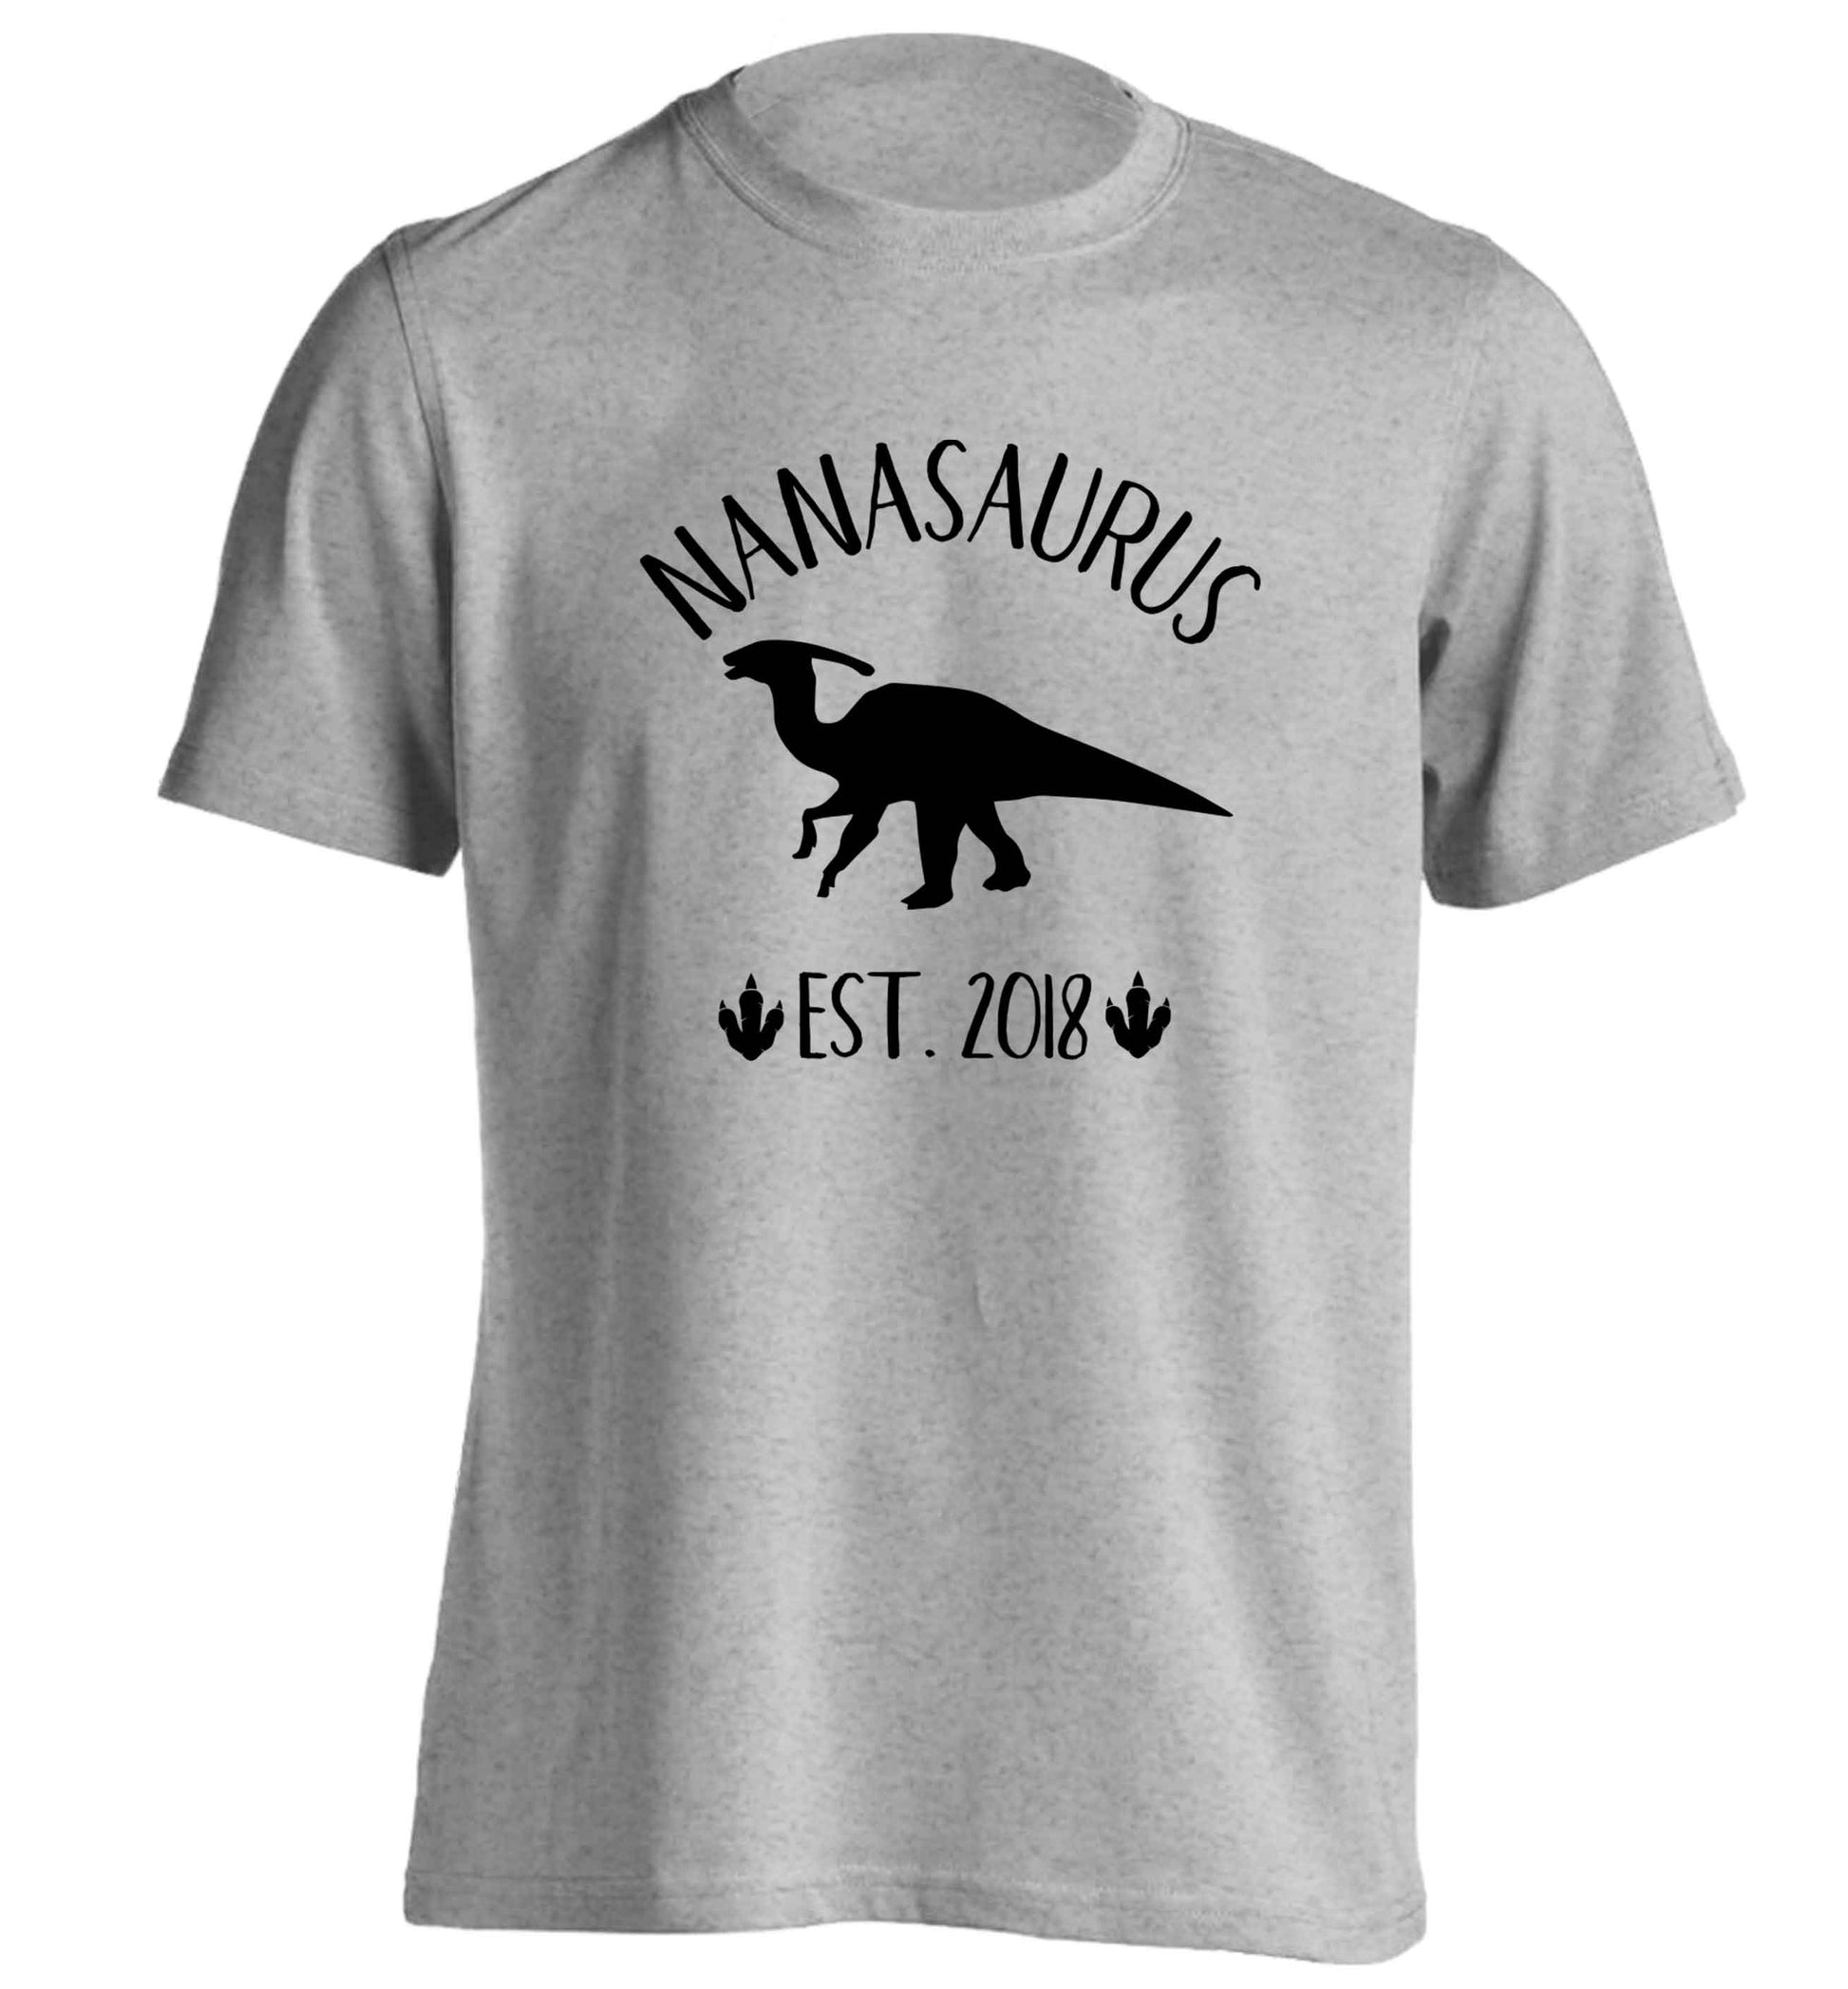 Personalised nanasaurus since (custom date) adults unisex grey Tshirt 2XL